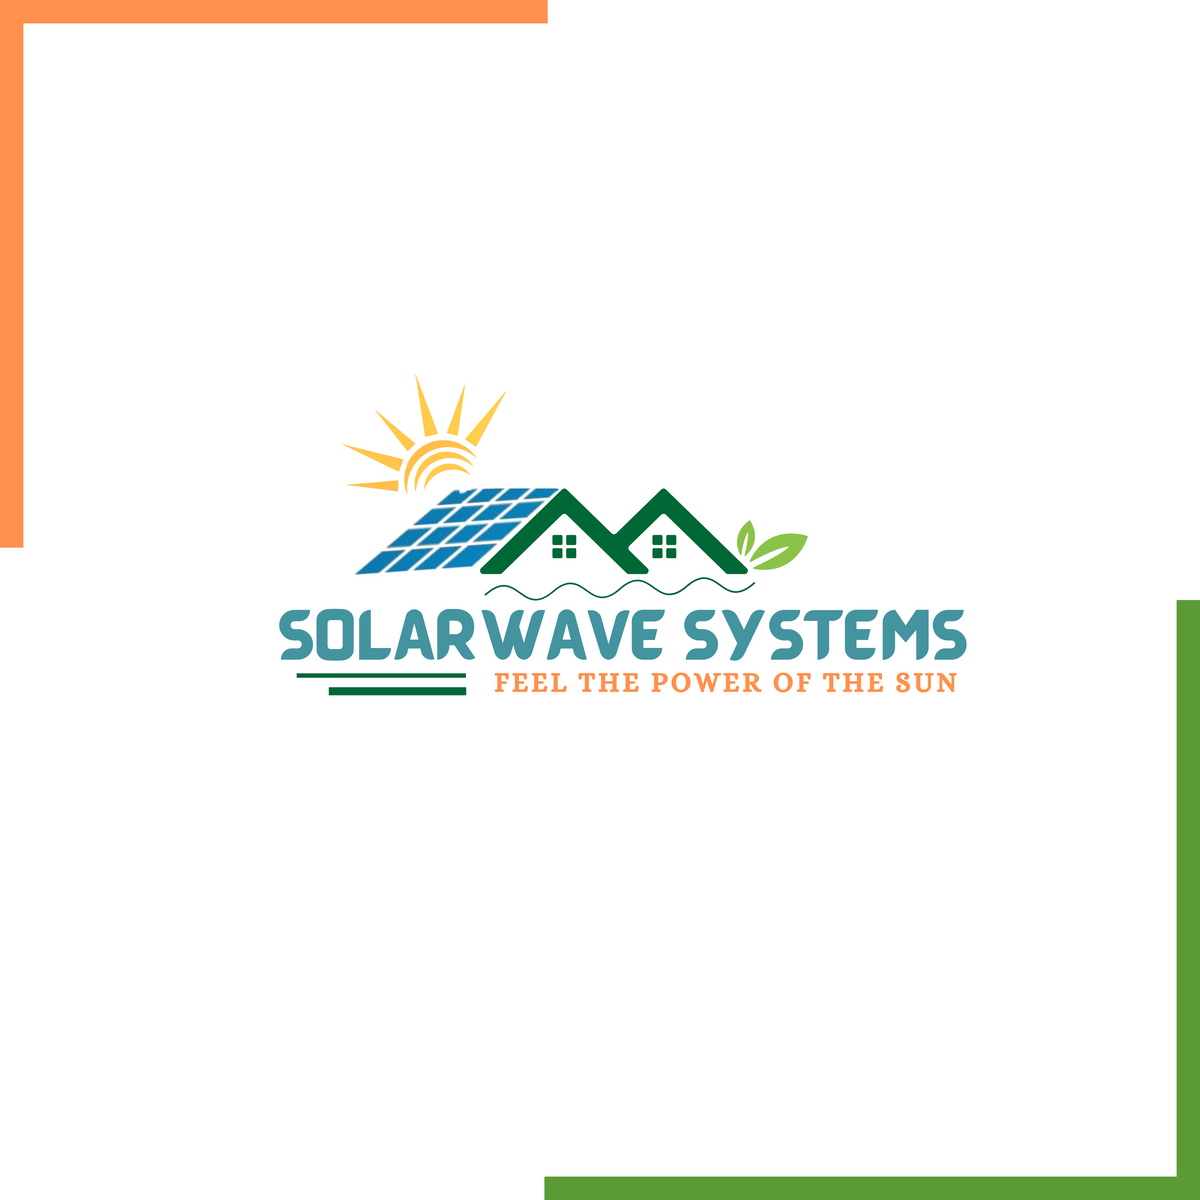 Solarwave Systems